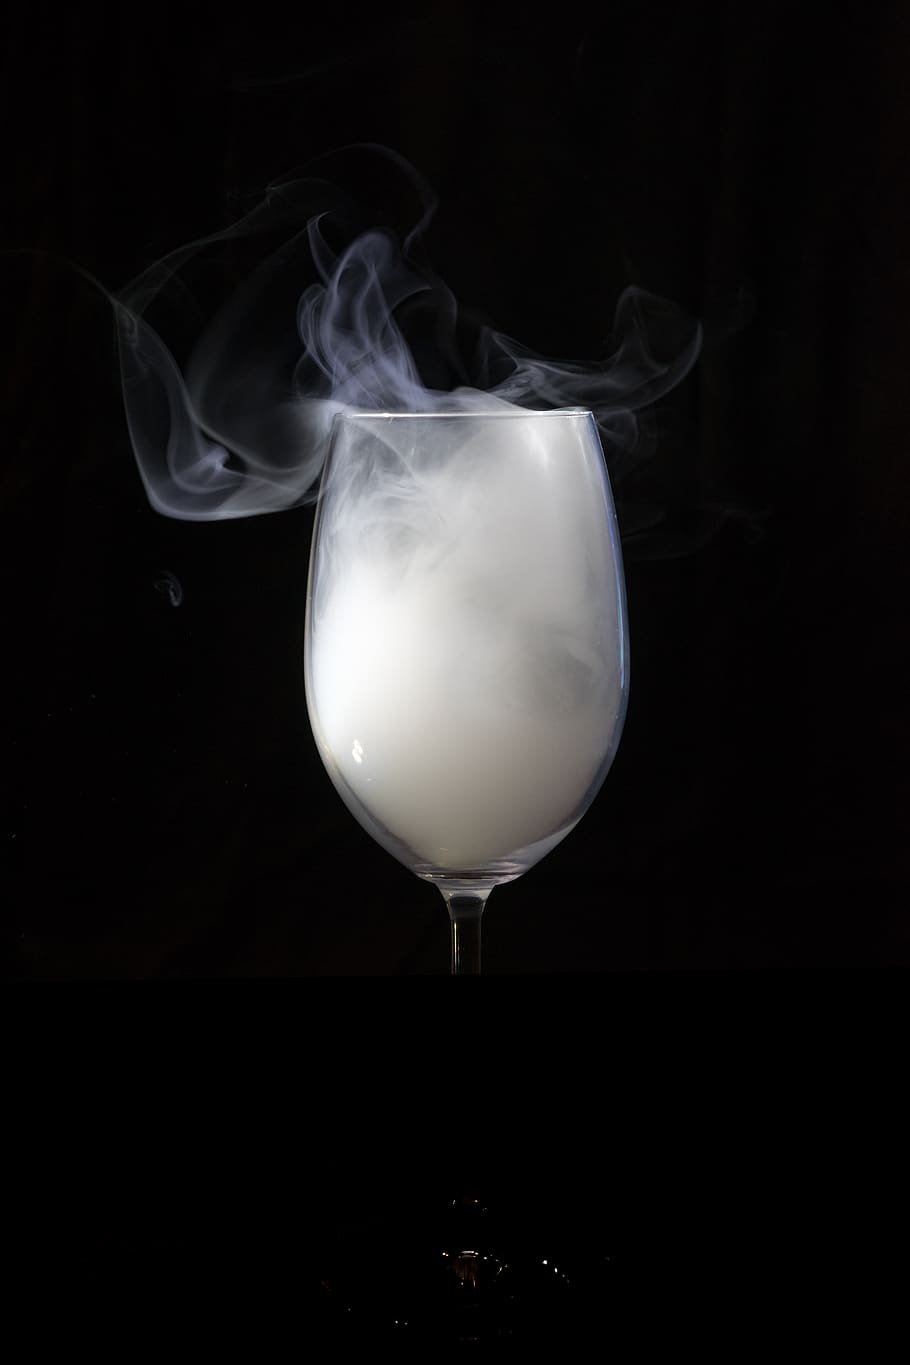 drink, glass, background, darkness, bar, smoke, wine glass, risk, dangerous, magic